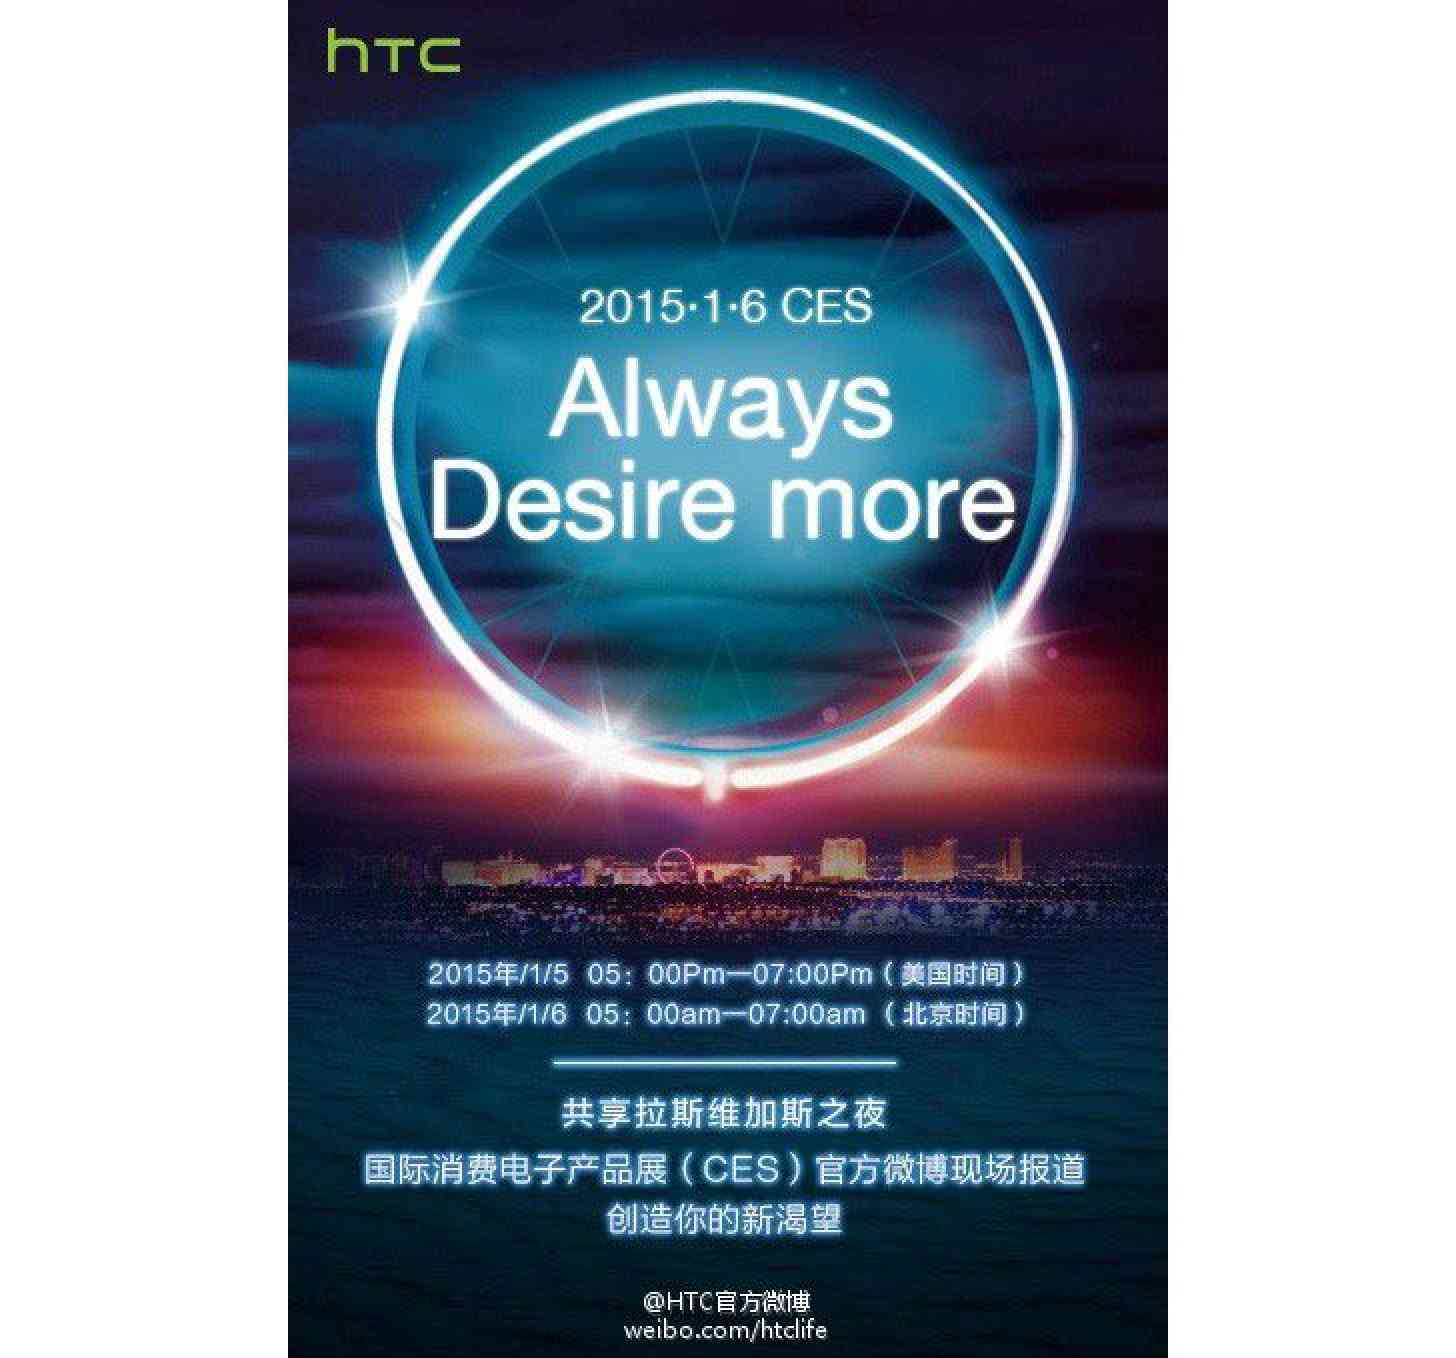 HTC Always Desire more CES 2015 teaser full